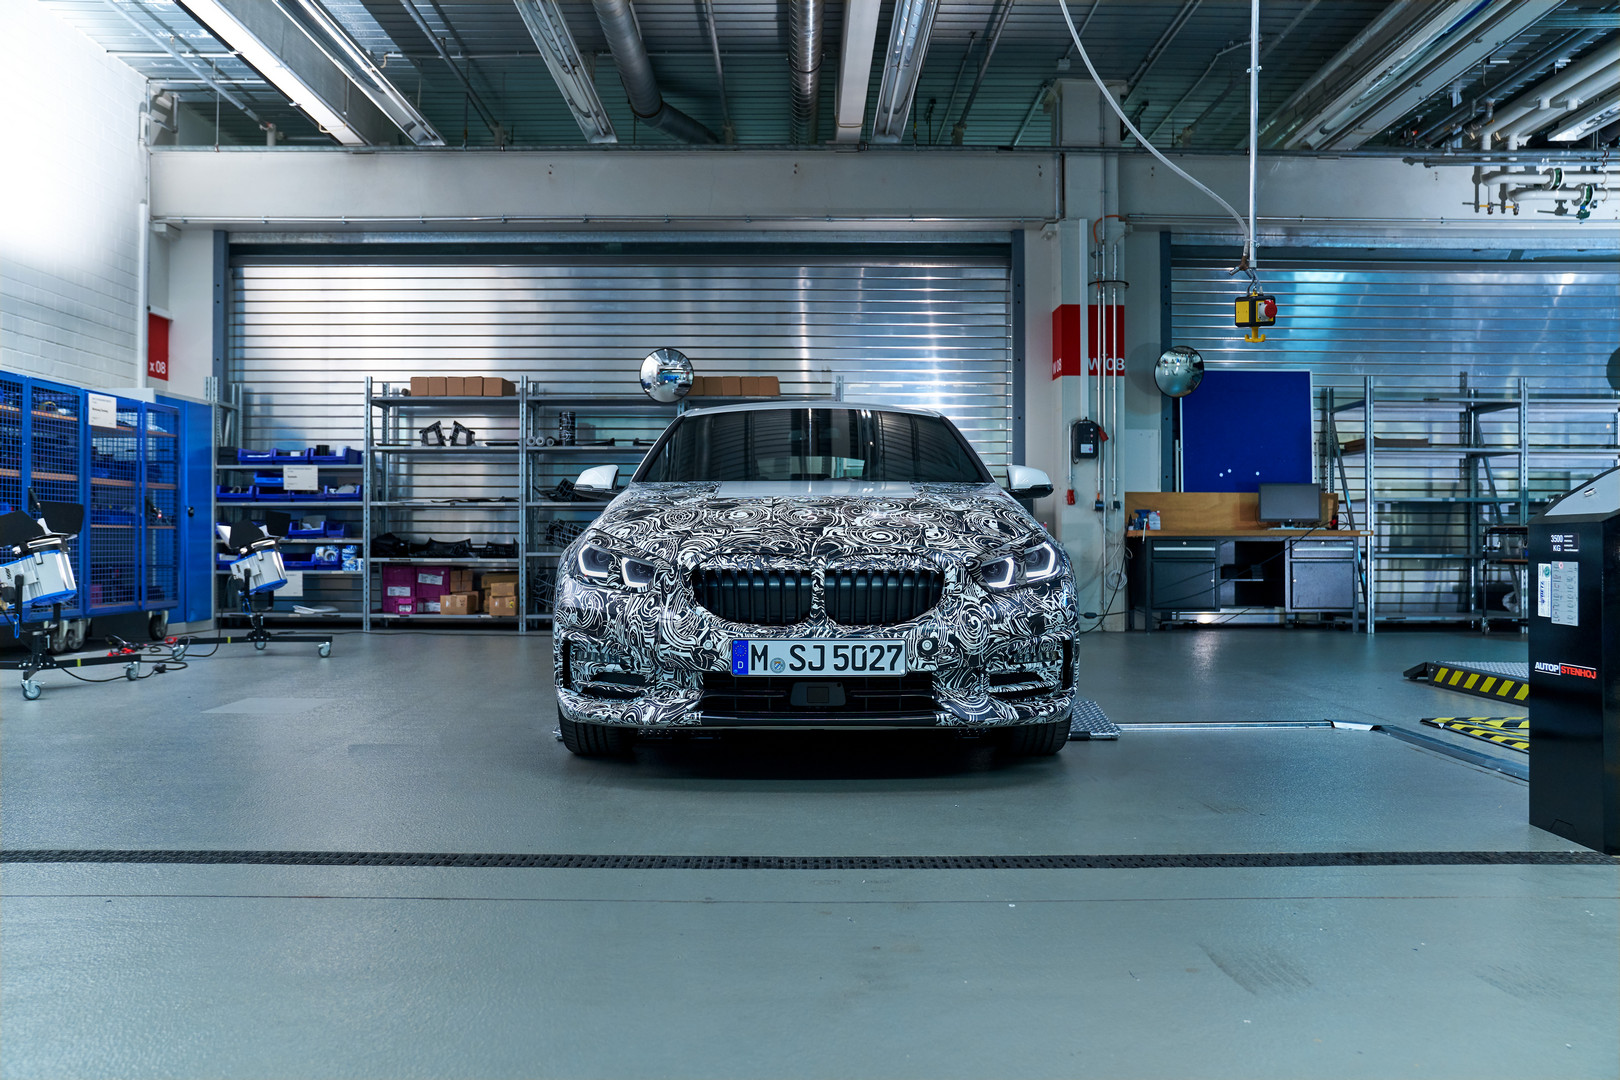 2020 BMW 1 Series